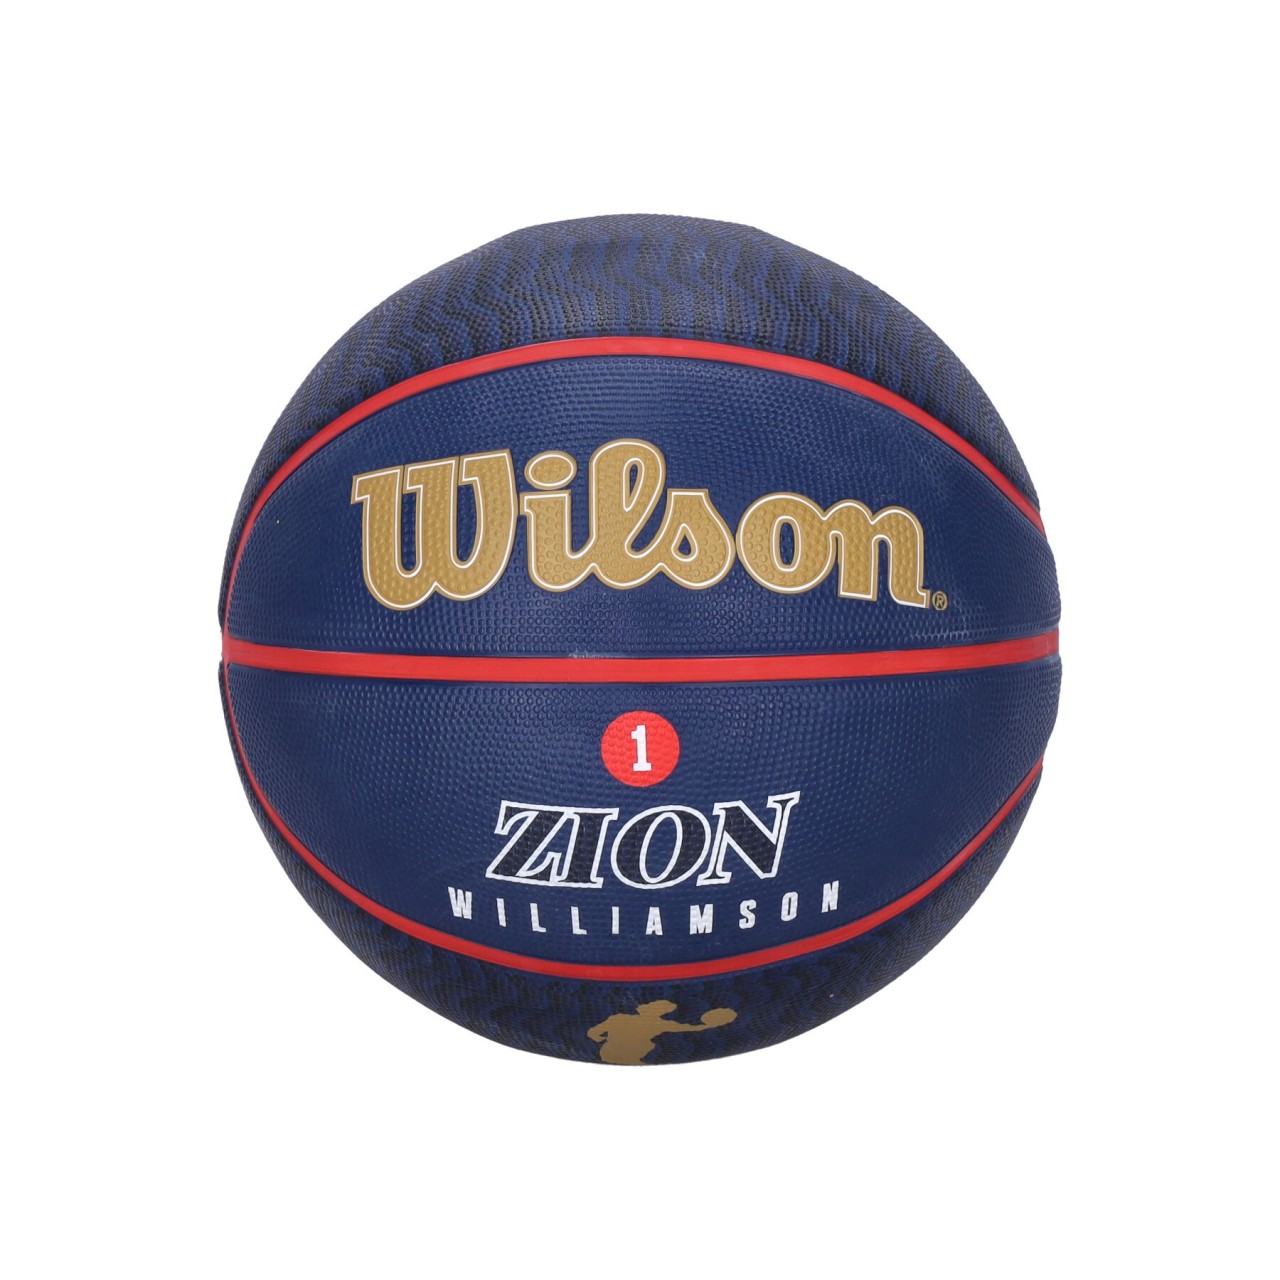 WILSON TEAM NBA ZION WILLIAMSON ICON OUTDOOR BASKETBALL SIZE 7 WZ4008601XB7